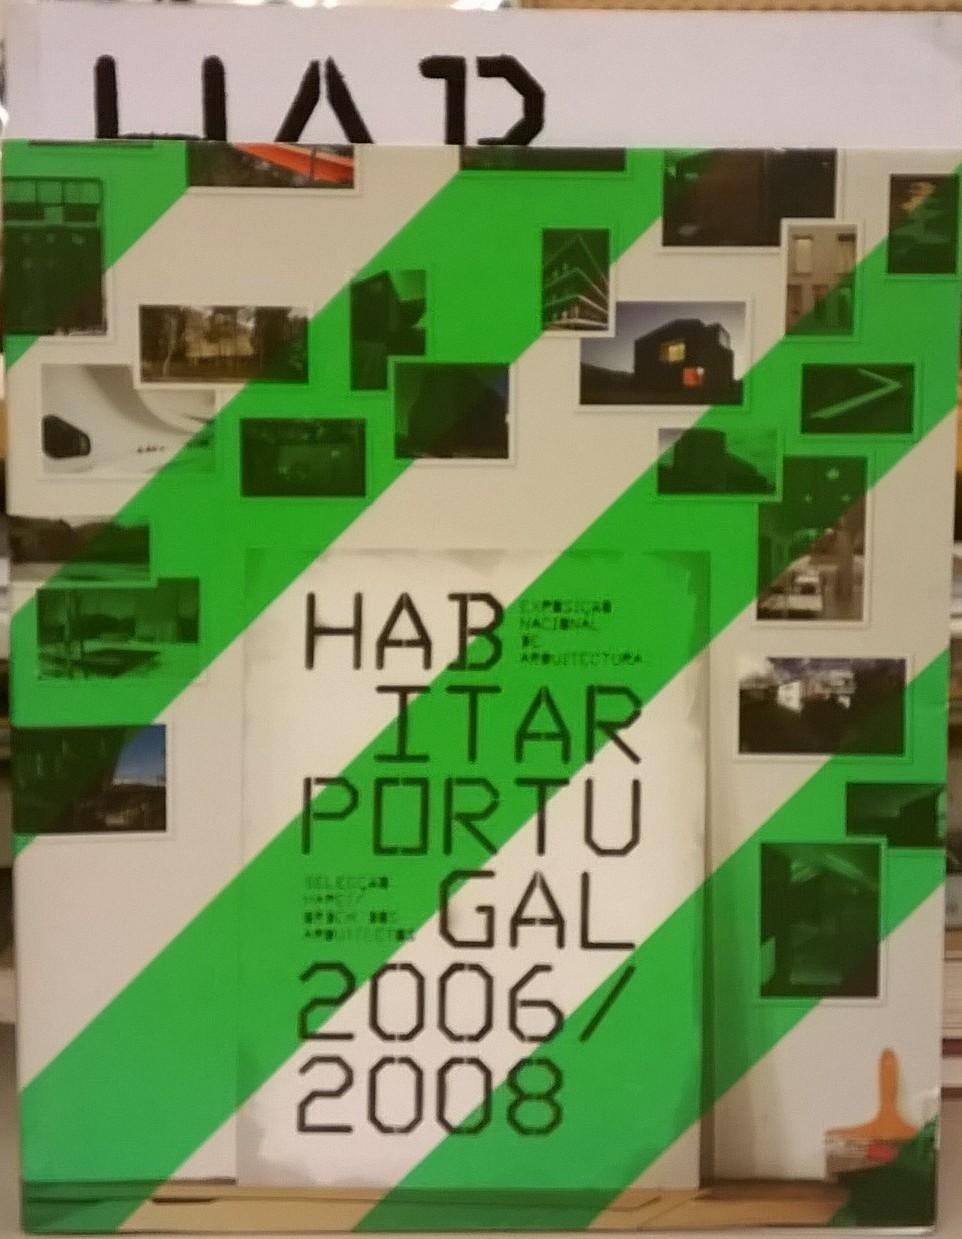 Habitar Portugal 2006/2008 - Various Authors